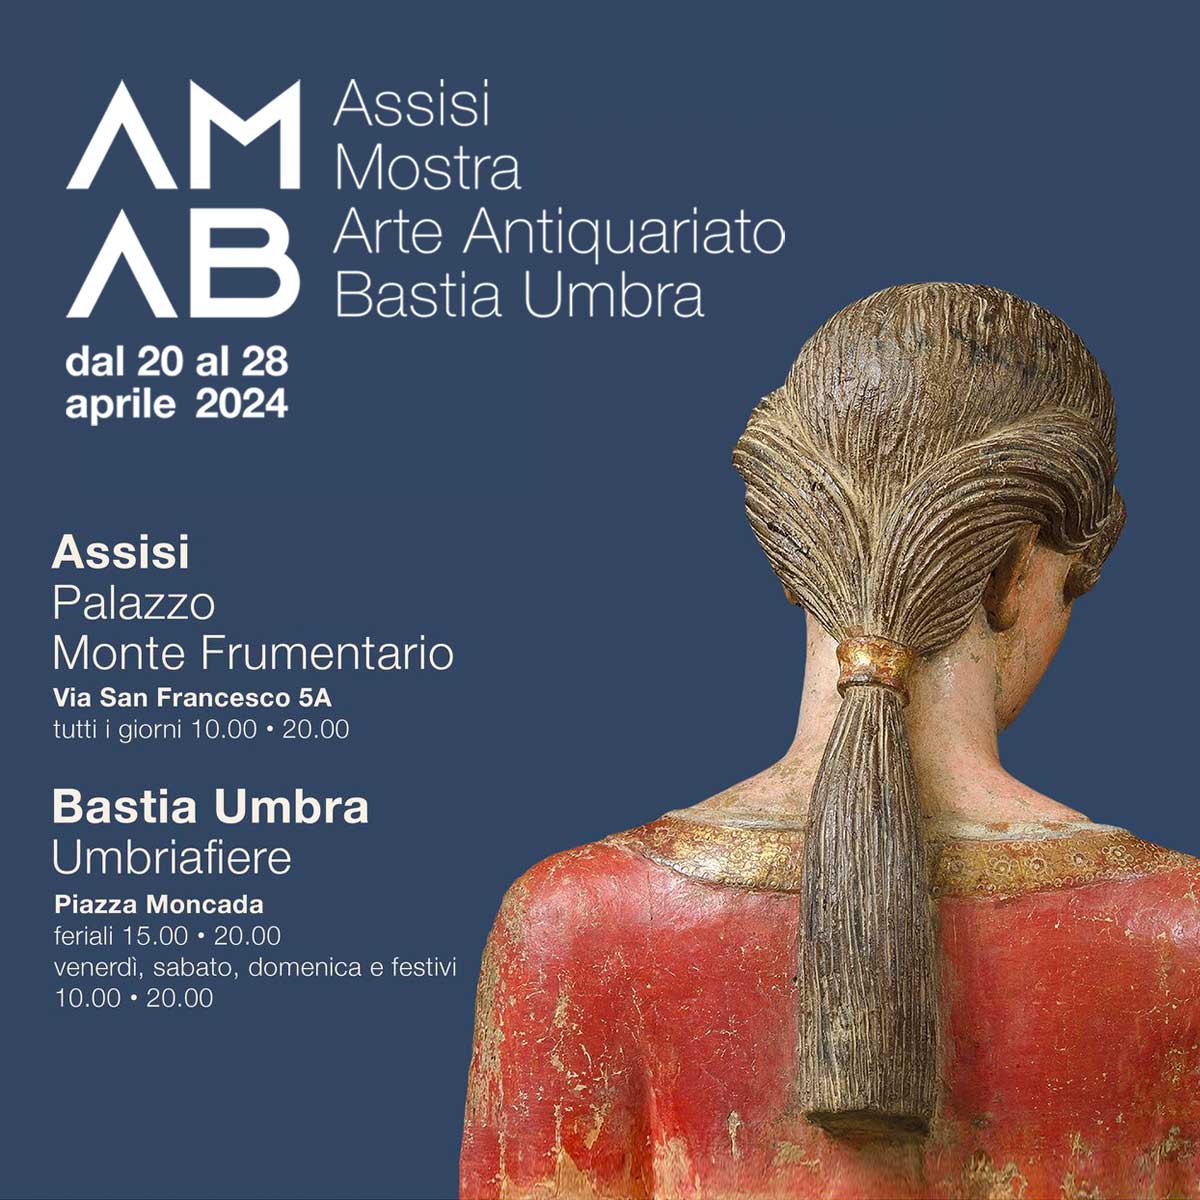 AMAB Assisi Mostra Arte Antiquariato Bastia Umbra a Umbriafiere (Pg)